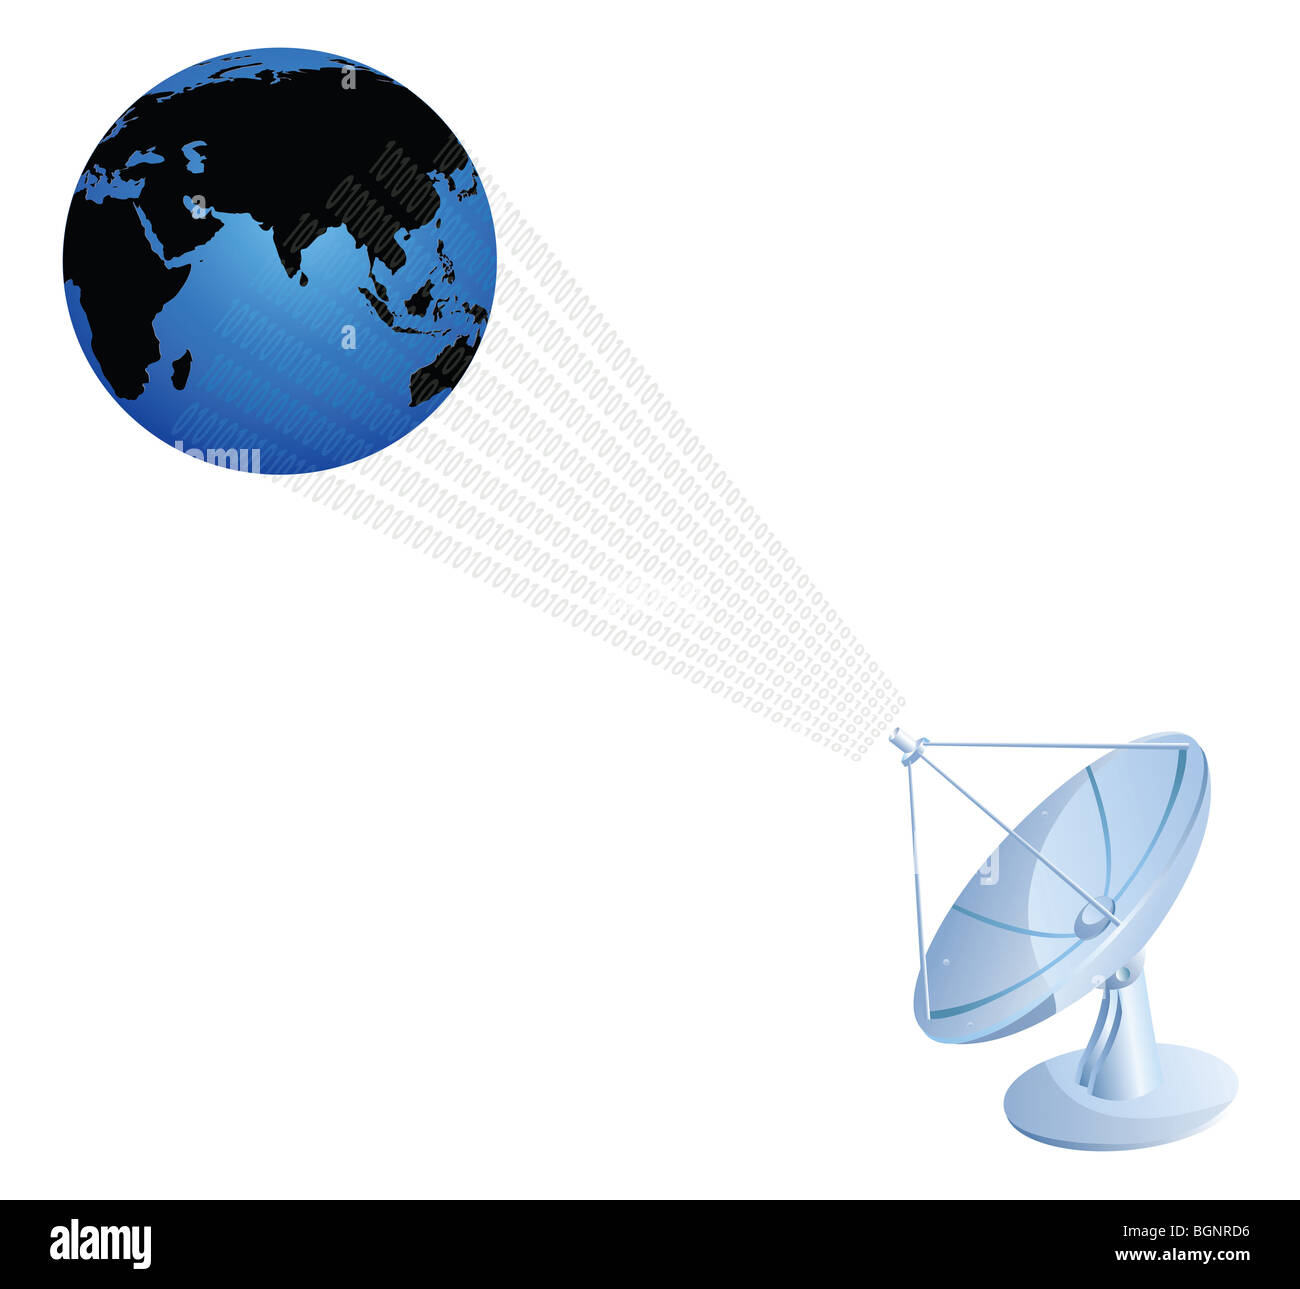 satellite communicating with the globe, binary digits Stock Photo